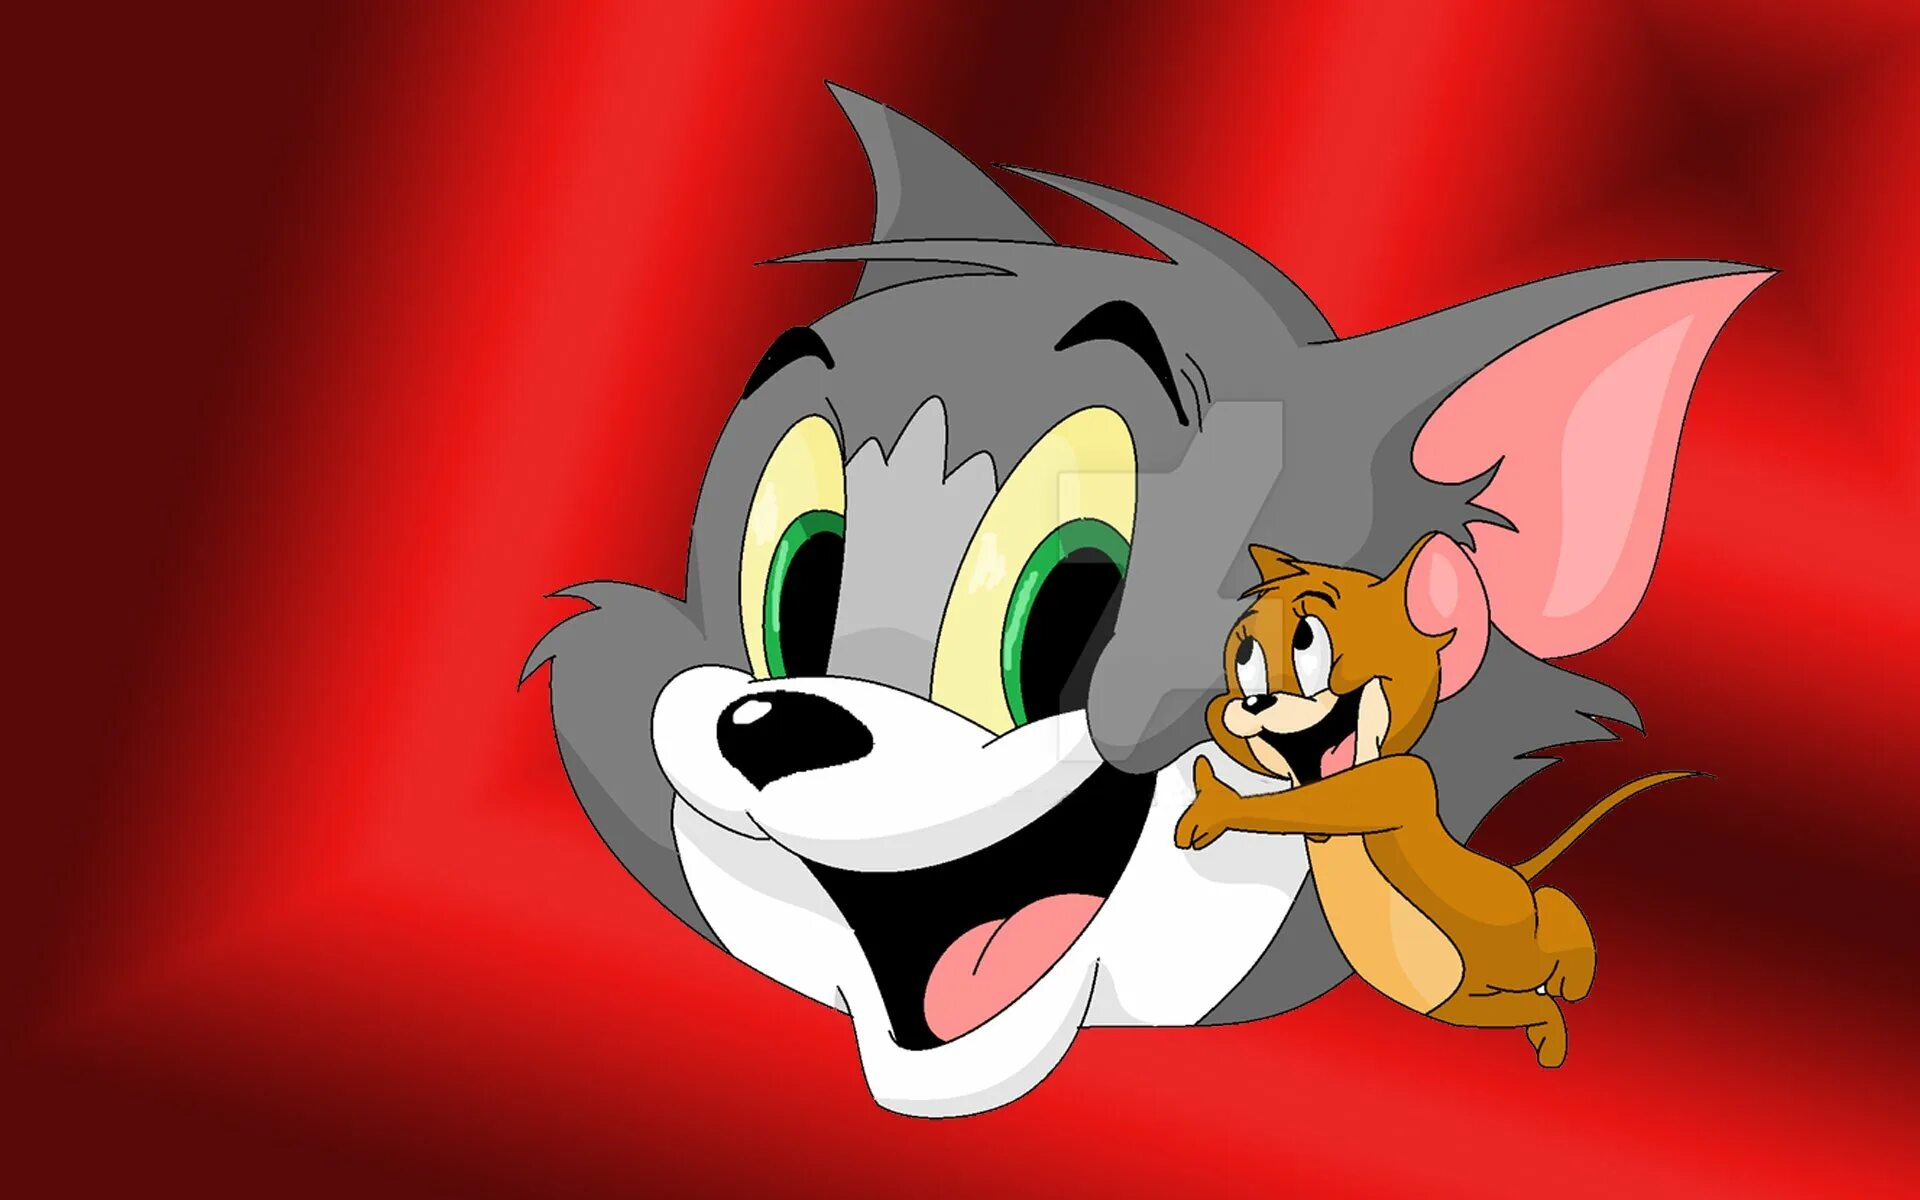 Том 1 ю. Tom and Jerry. Tom and Jerry cartoon.